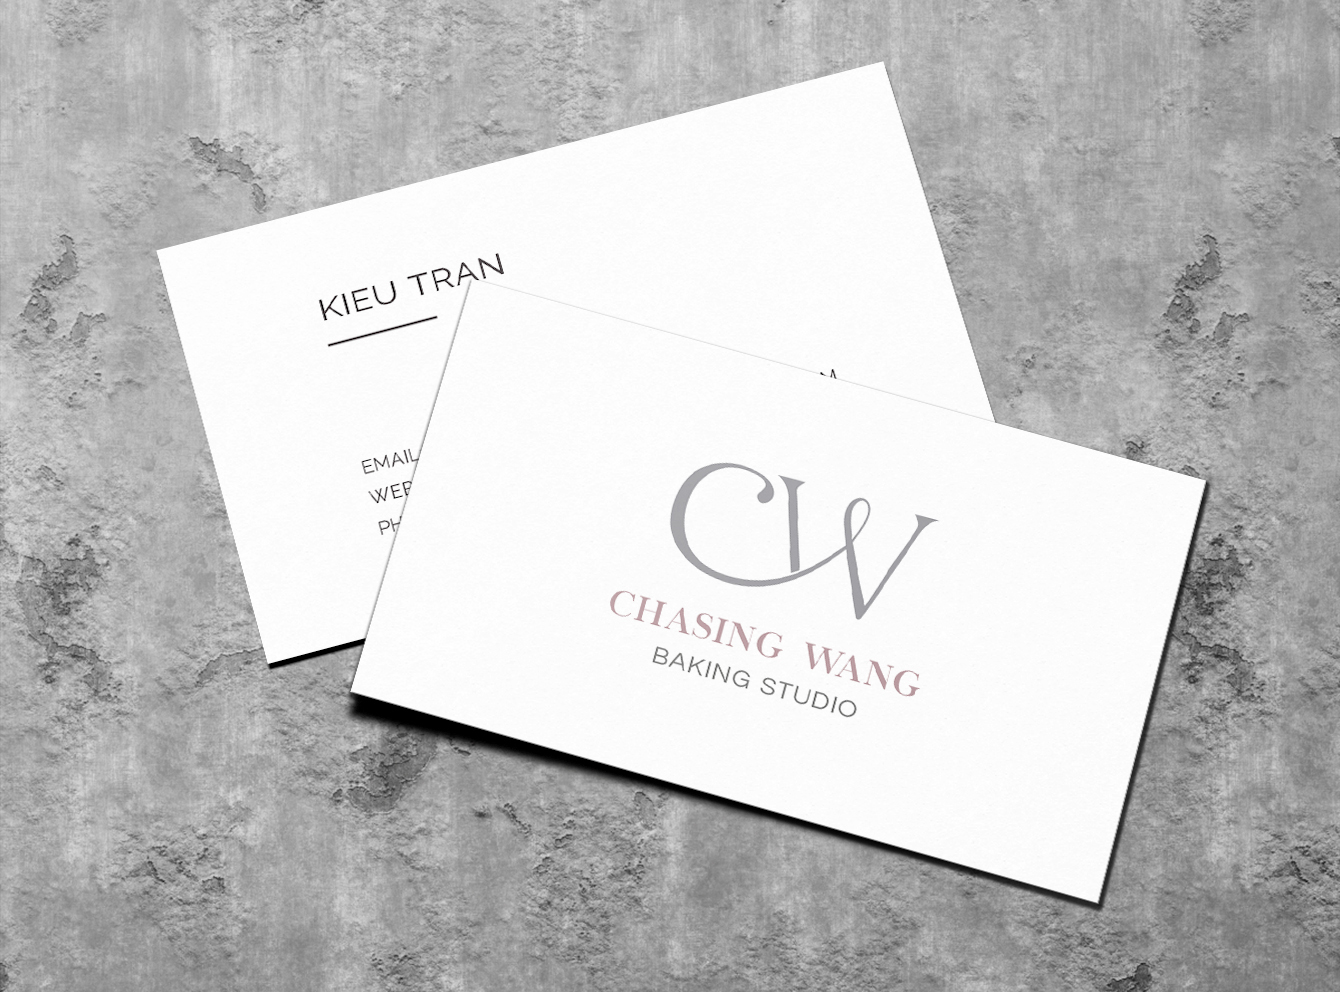 Chasing-Wang-Business-Card